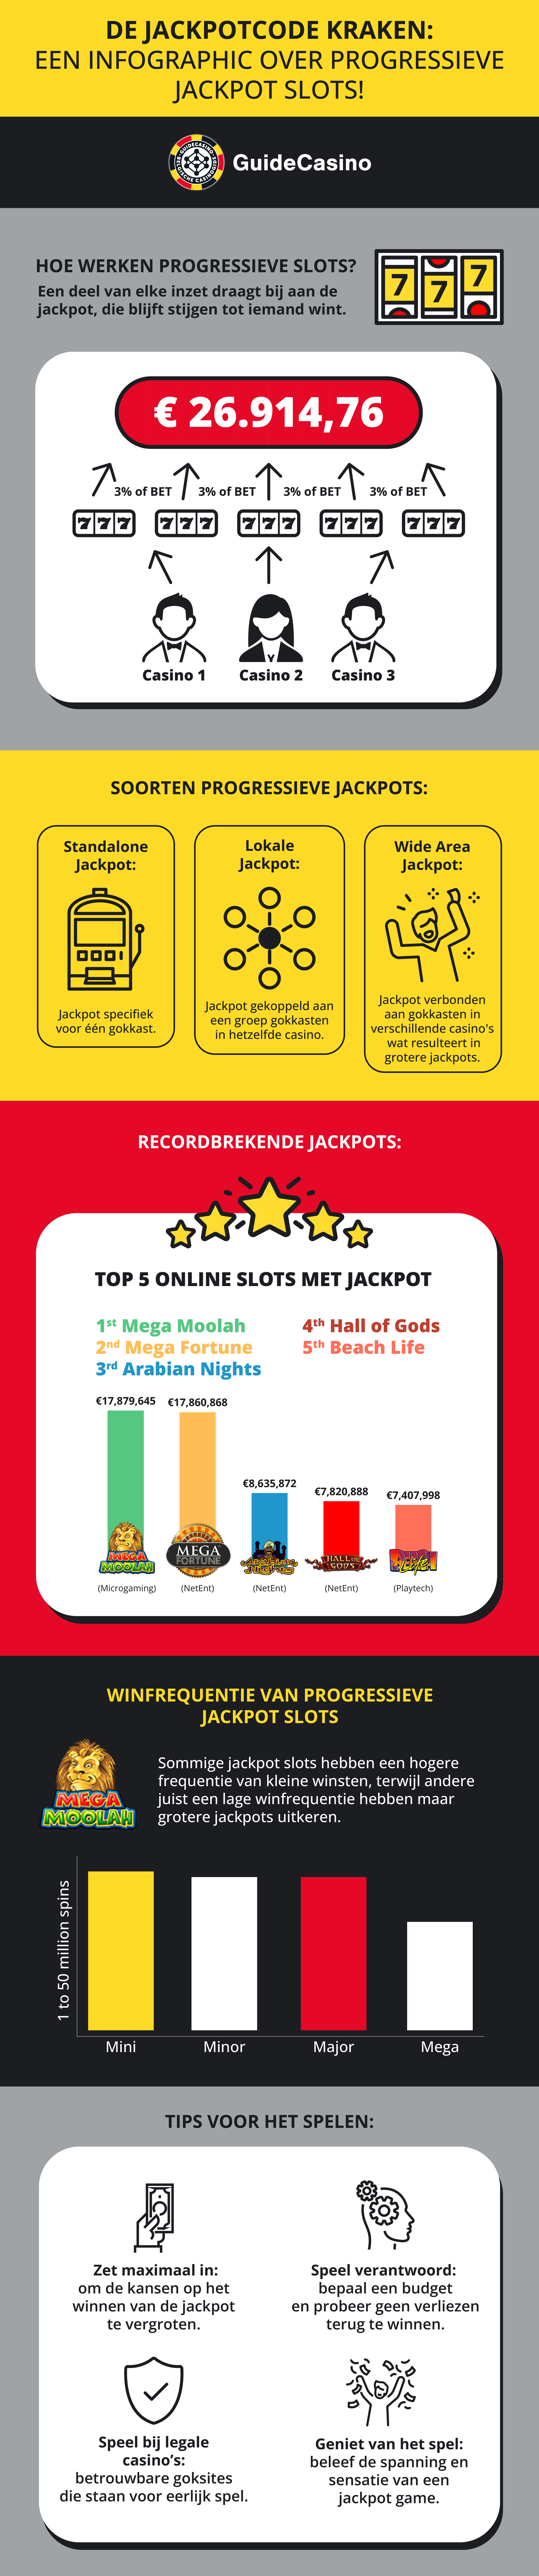 Infographic: alle info over progressieve jackpot slots!